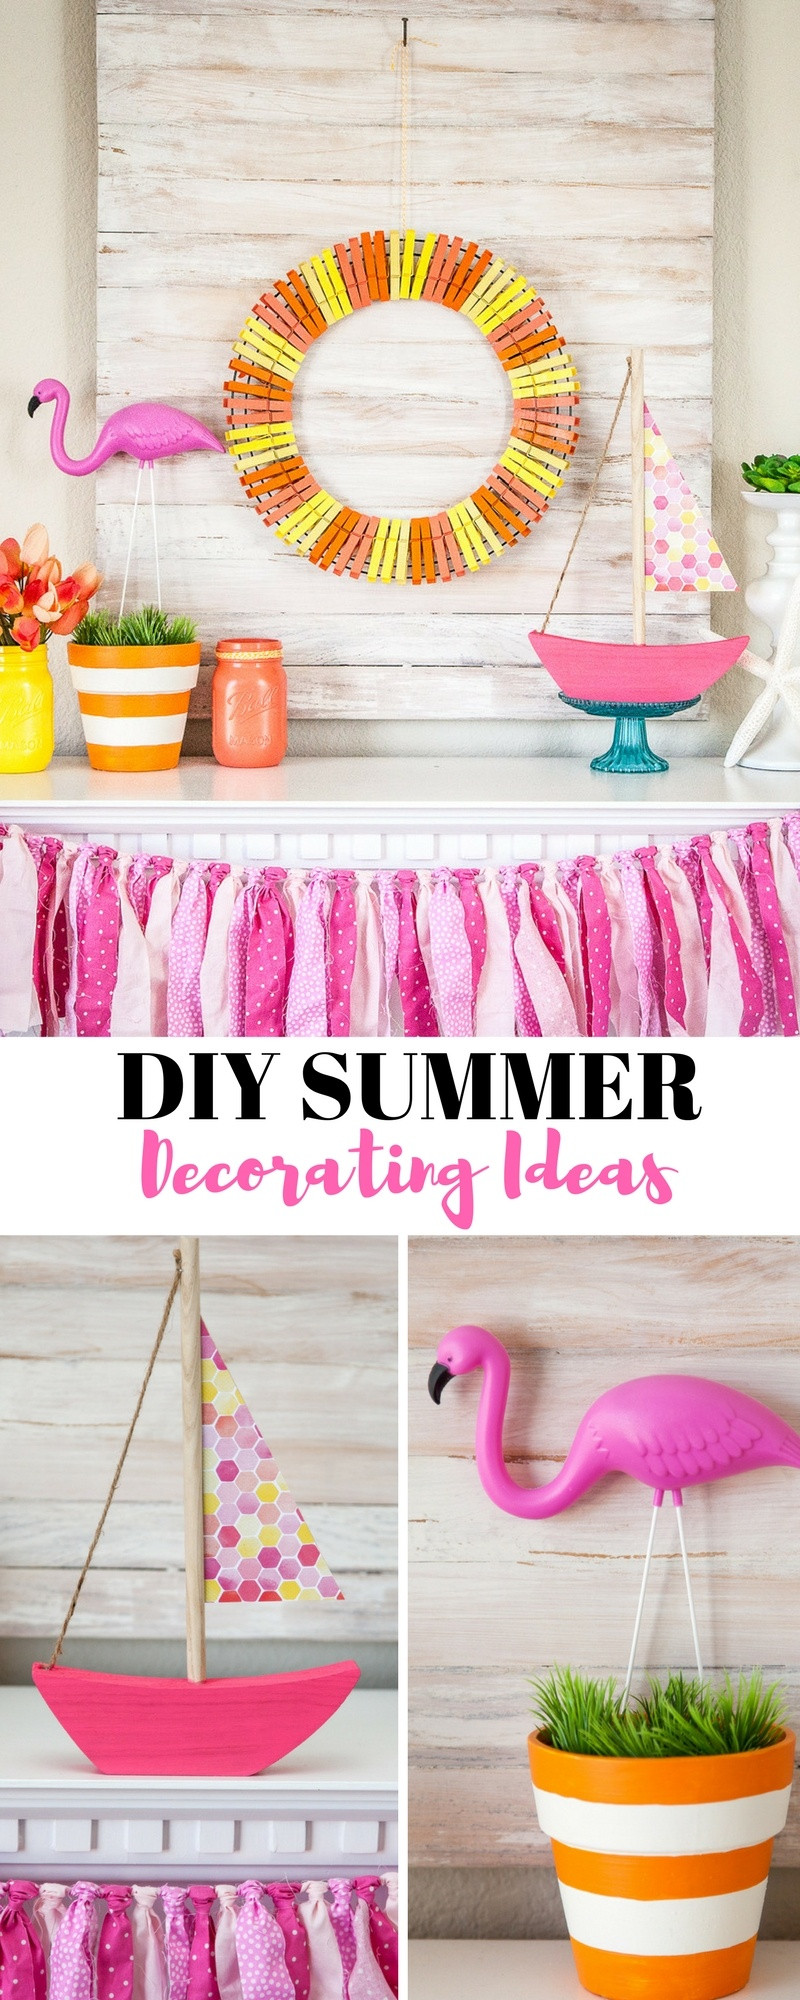 Summer Decor DIY
 DIY Summer Decorating Ideas by Destro graphy on Love